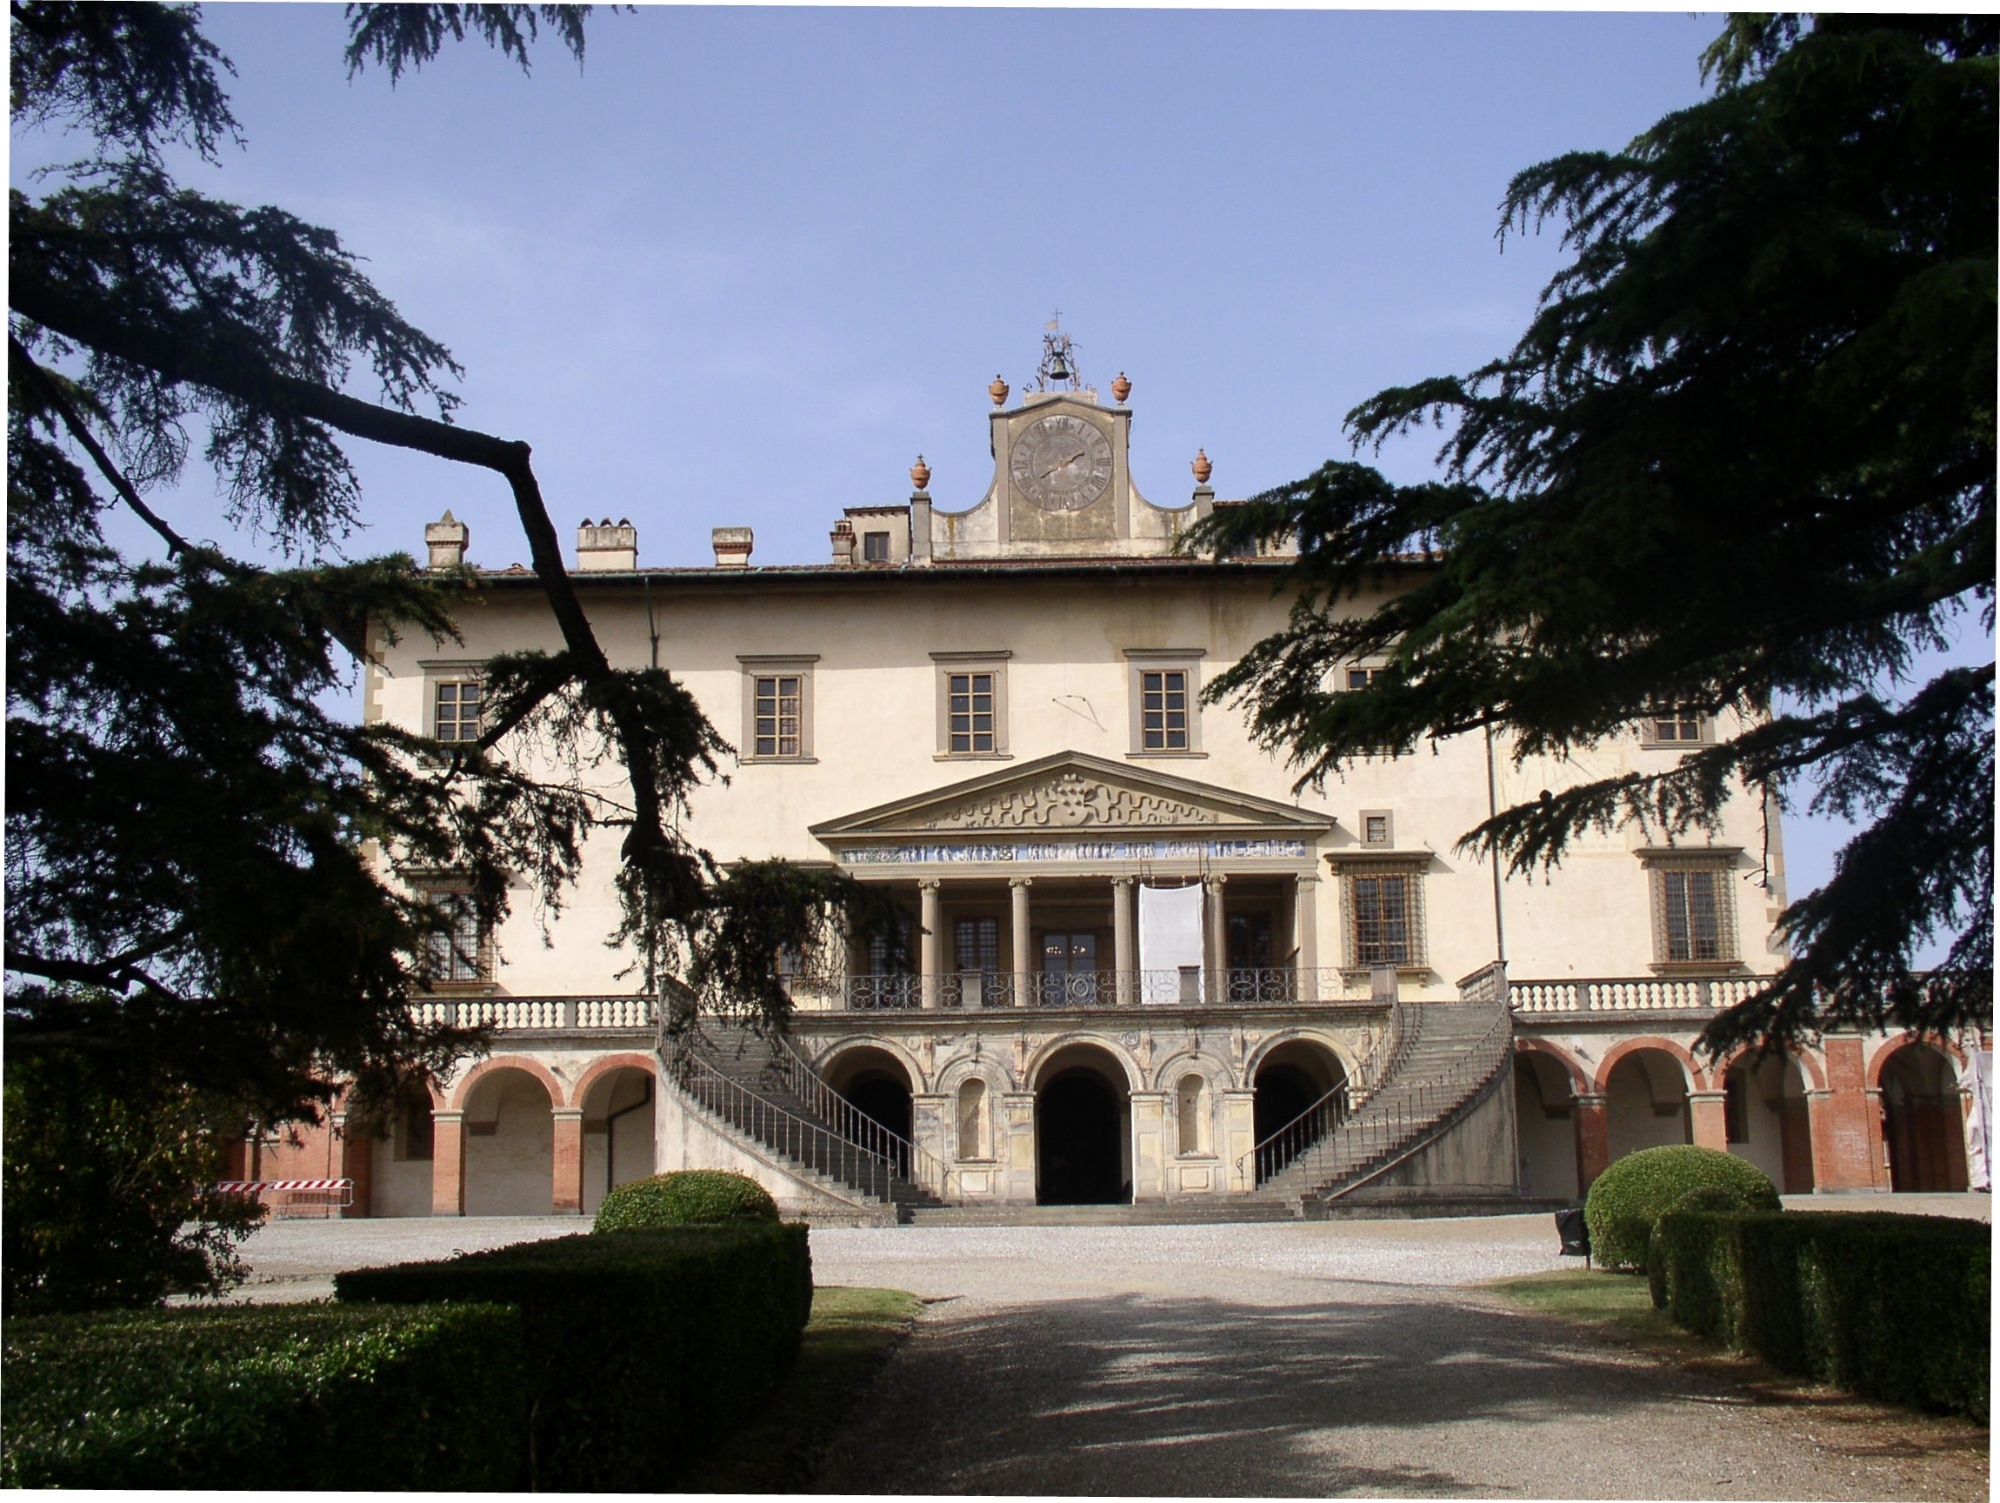 Die Villa Medici in Poggio a Caiano